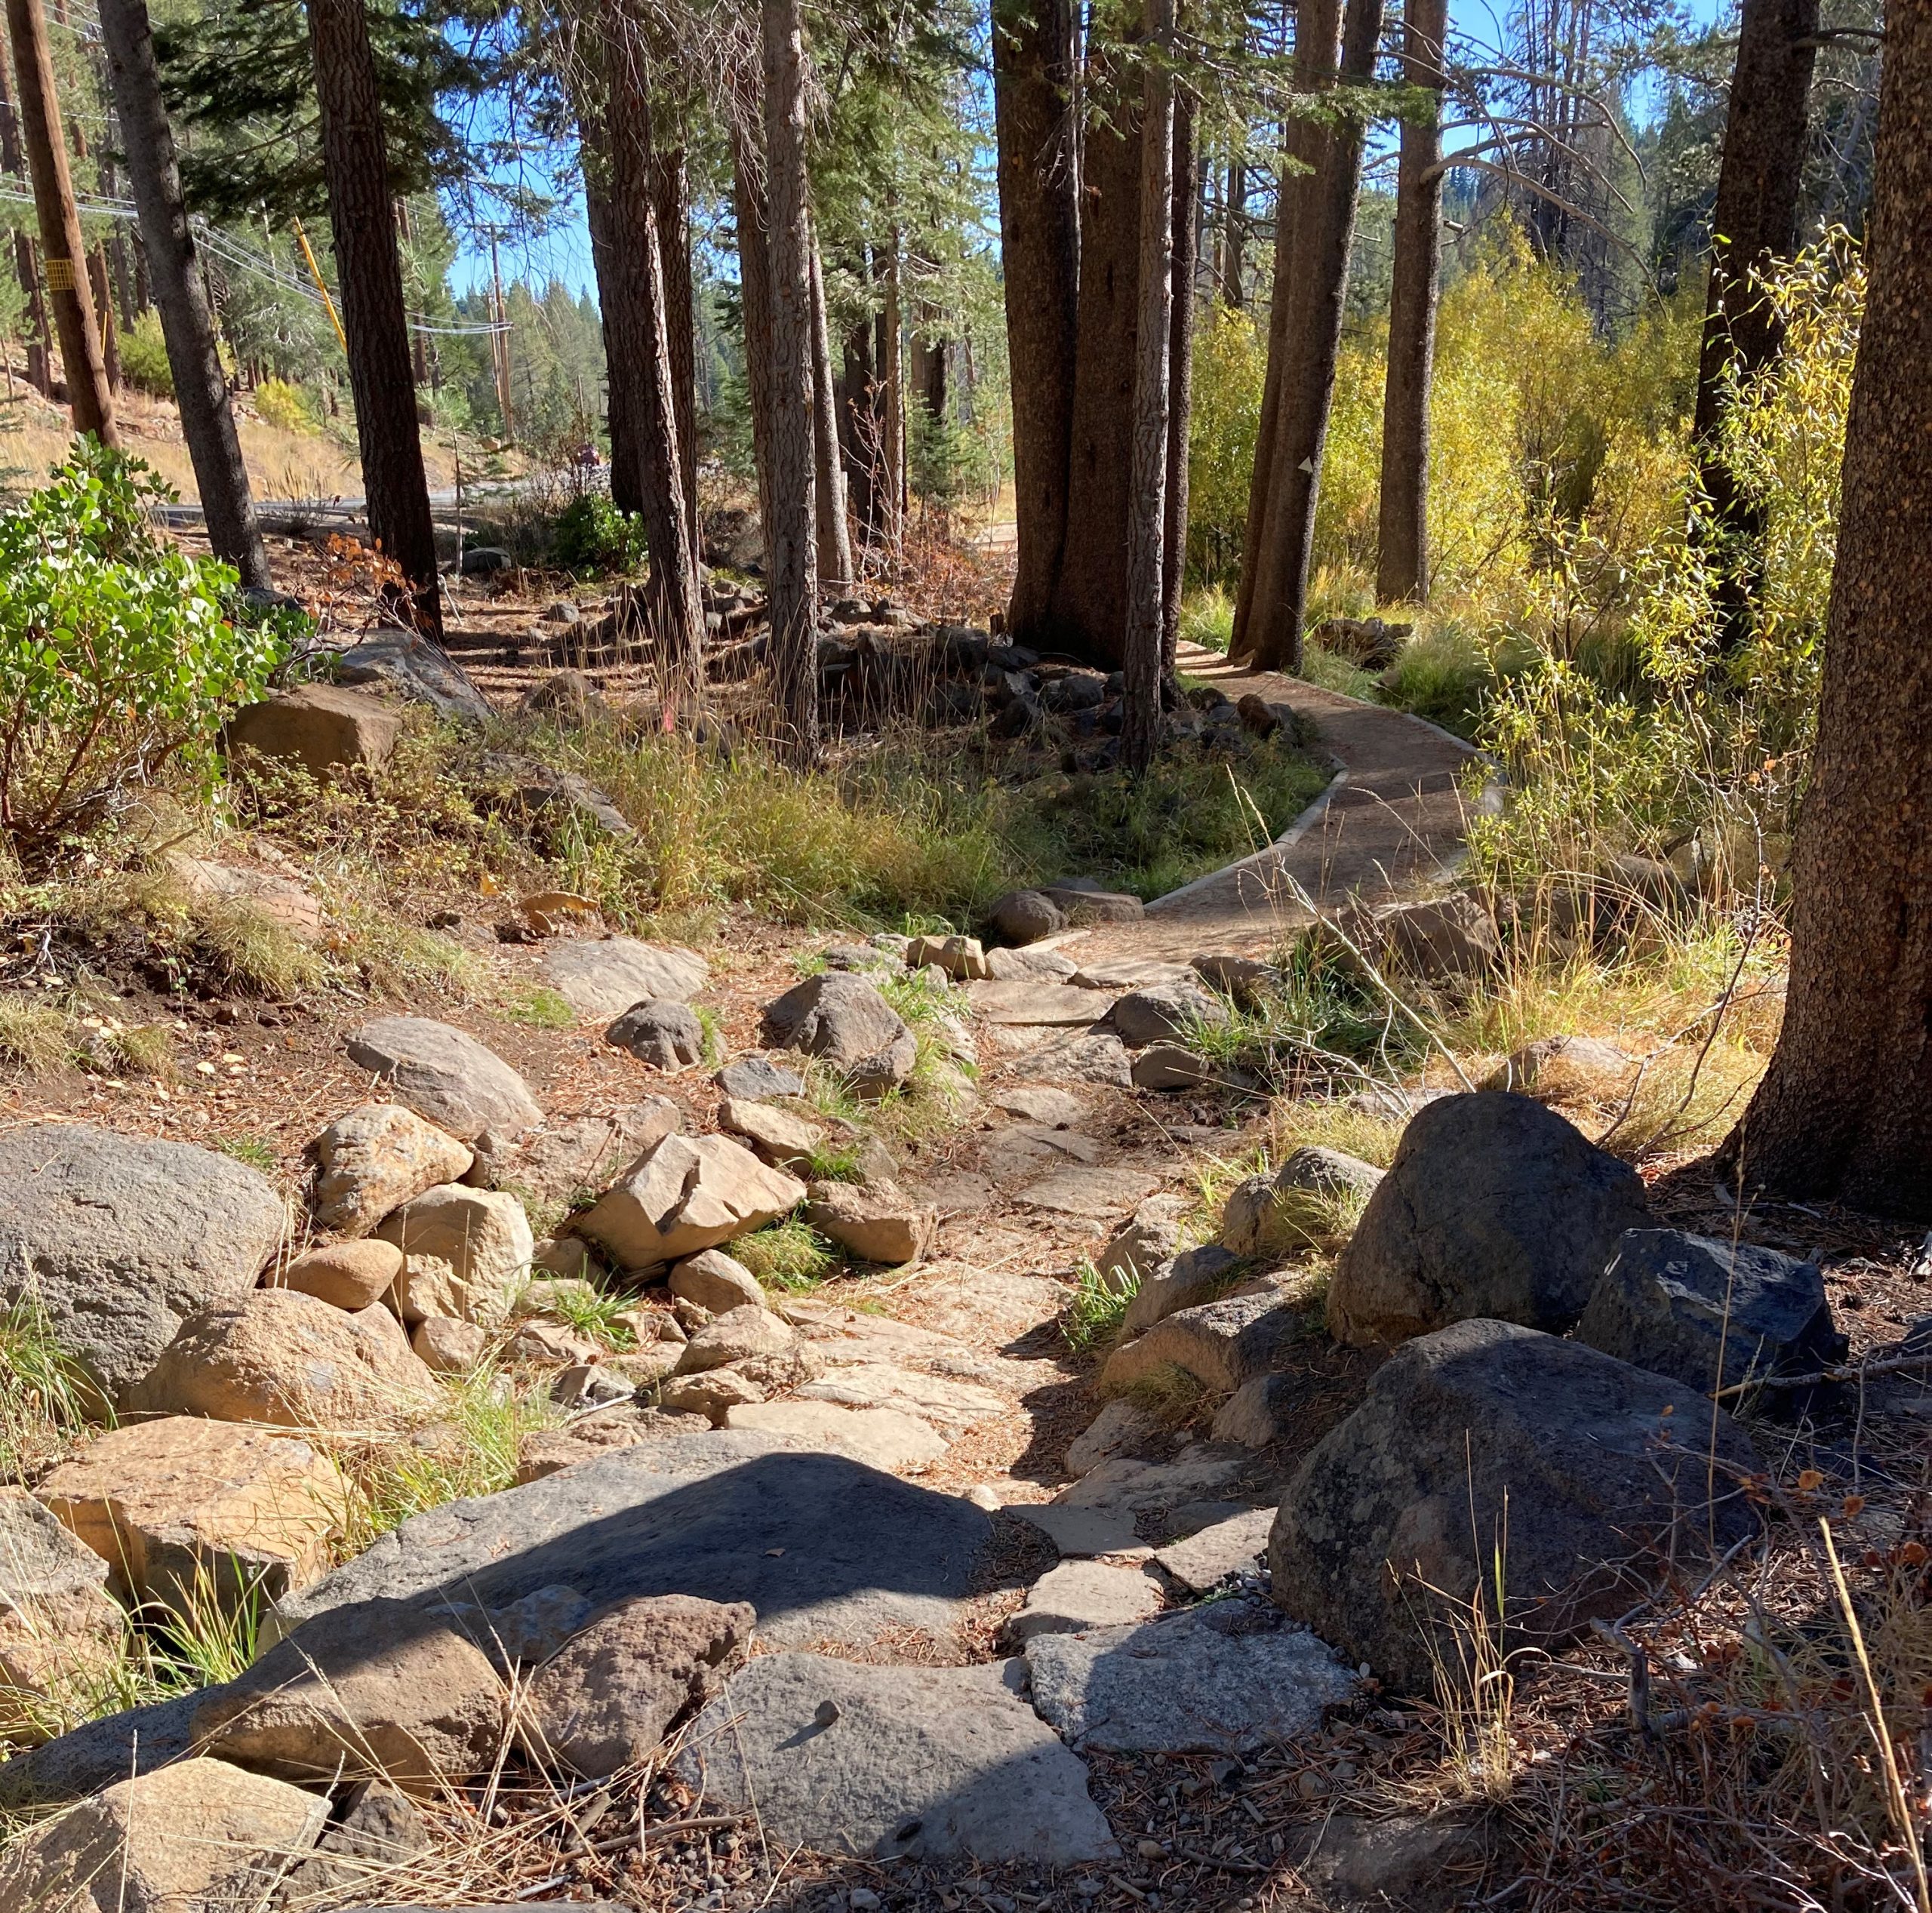 Tahoe Donner trail enhanced as part of a Dudek landscape architecture project.